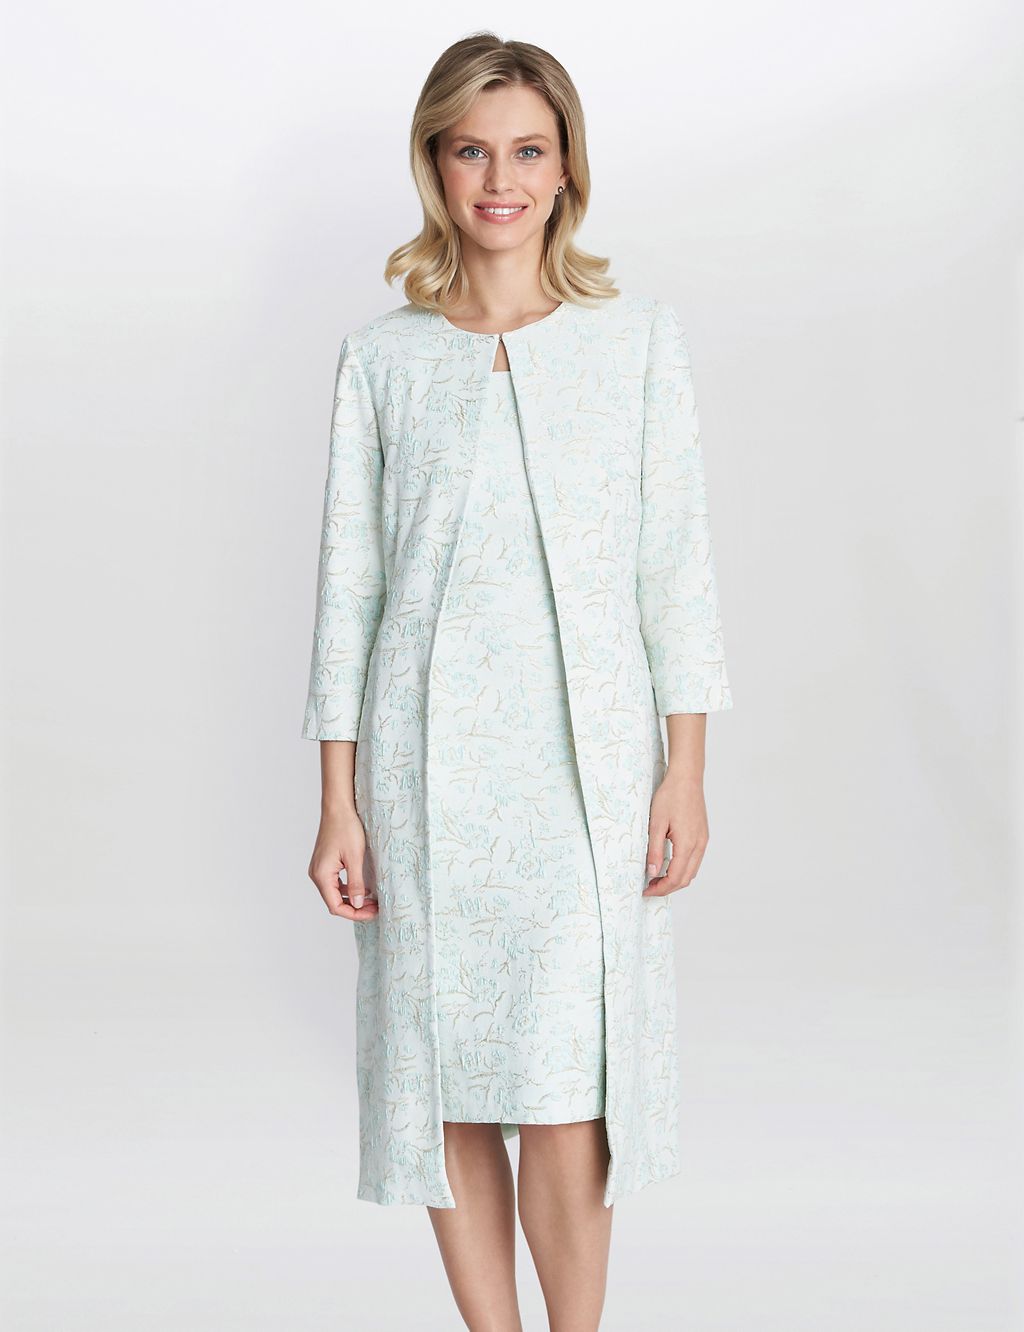 Jacquard Round Neck Shift Dress with Coat | Gina Bacconi | M&S